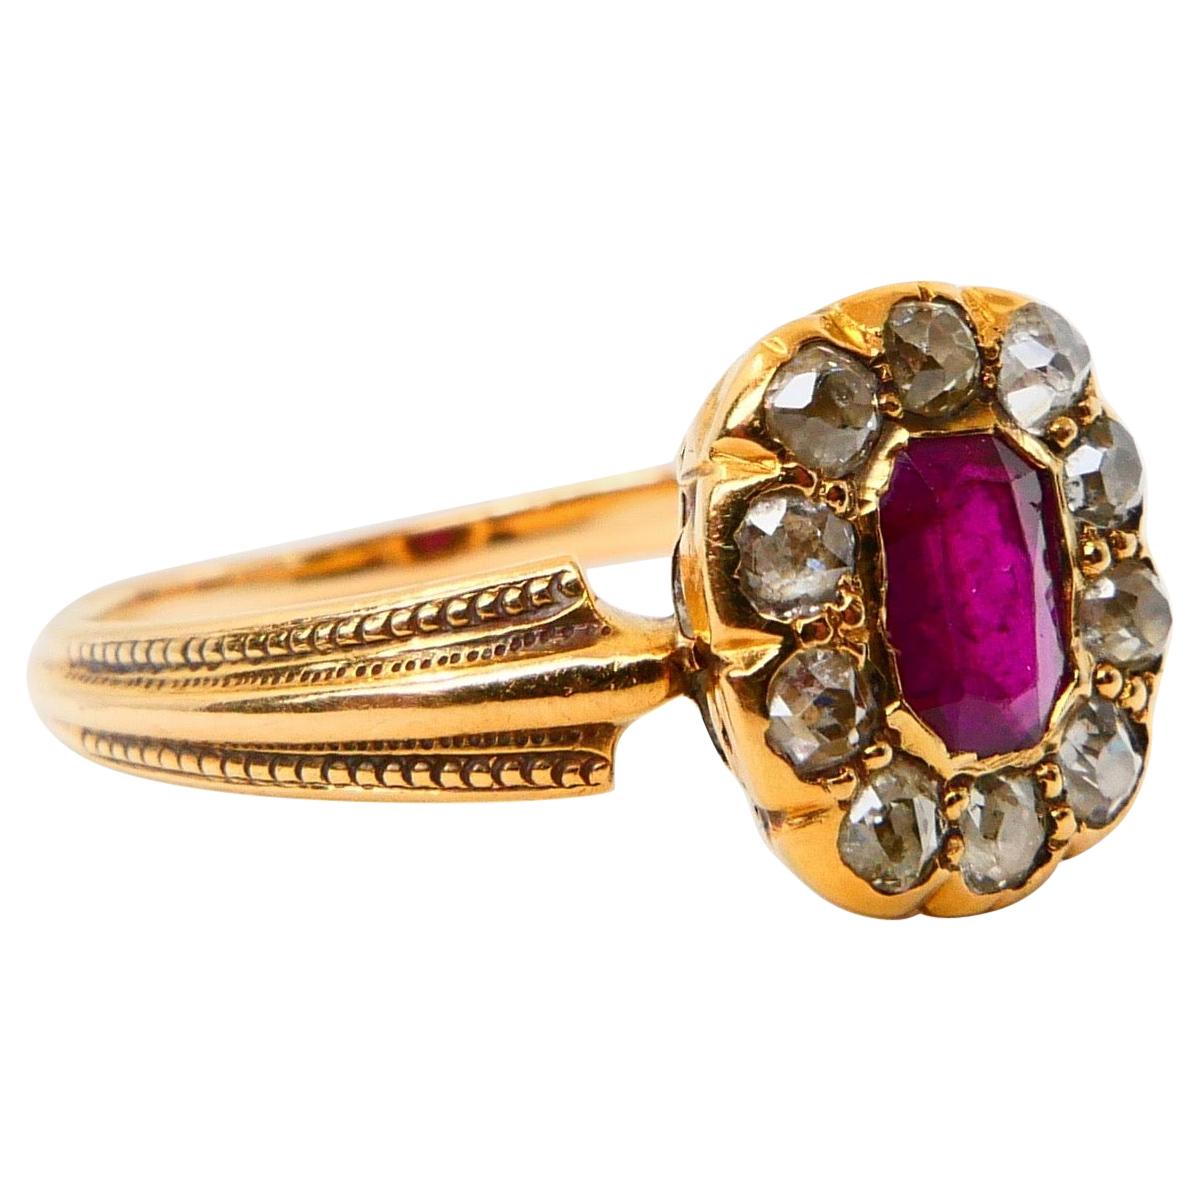 Contemporary Vintage Burma Ruby and Old Mine Cut Diamond Ring, 18 Karat Yellow Gold